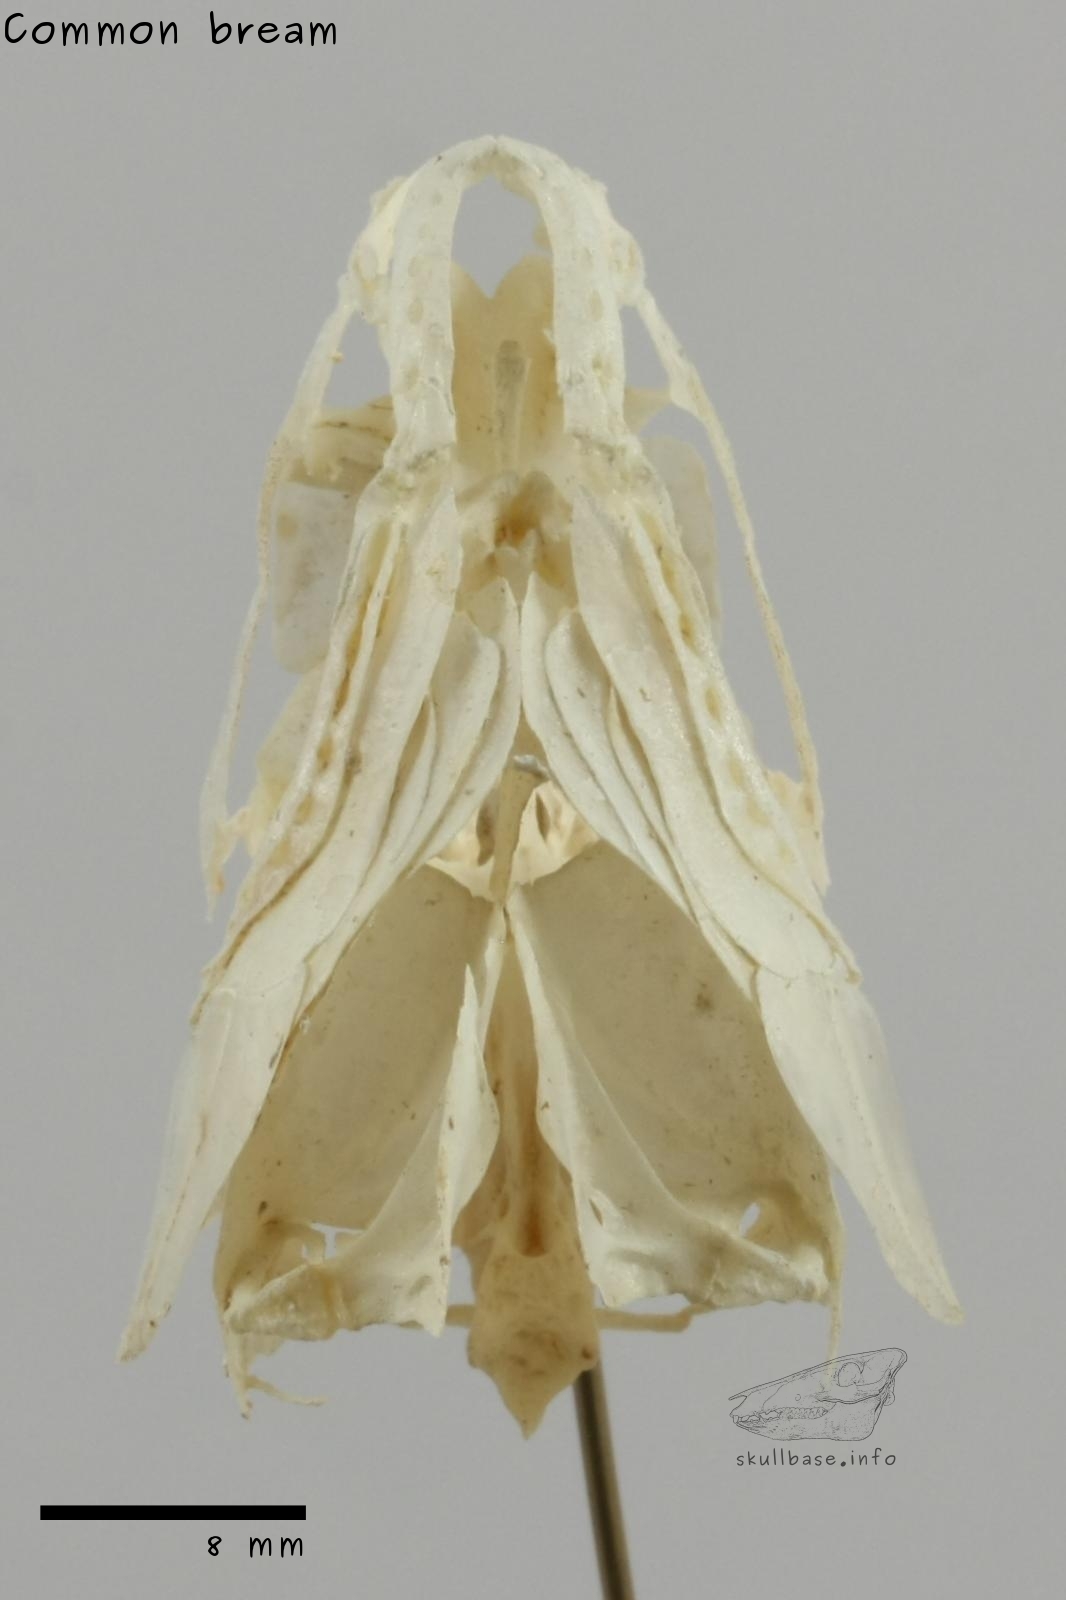 Common bream (Abramis brama) skull ventral view